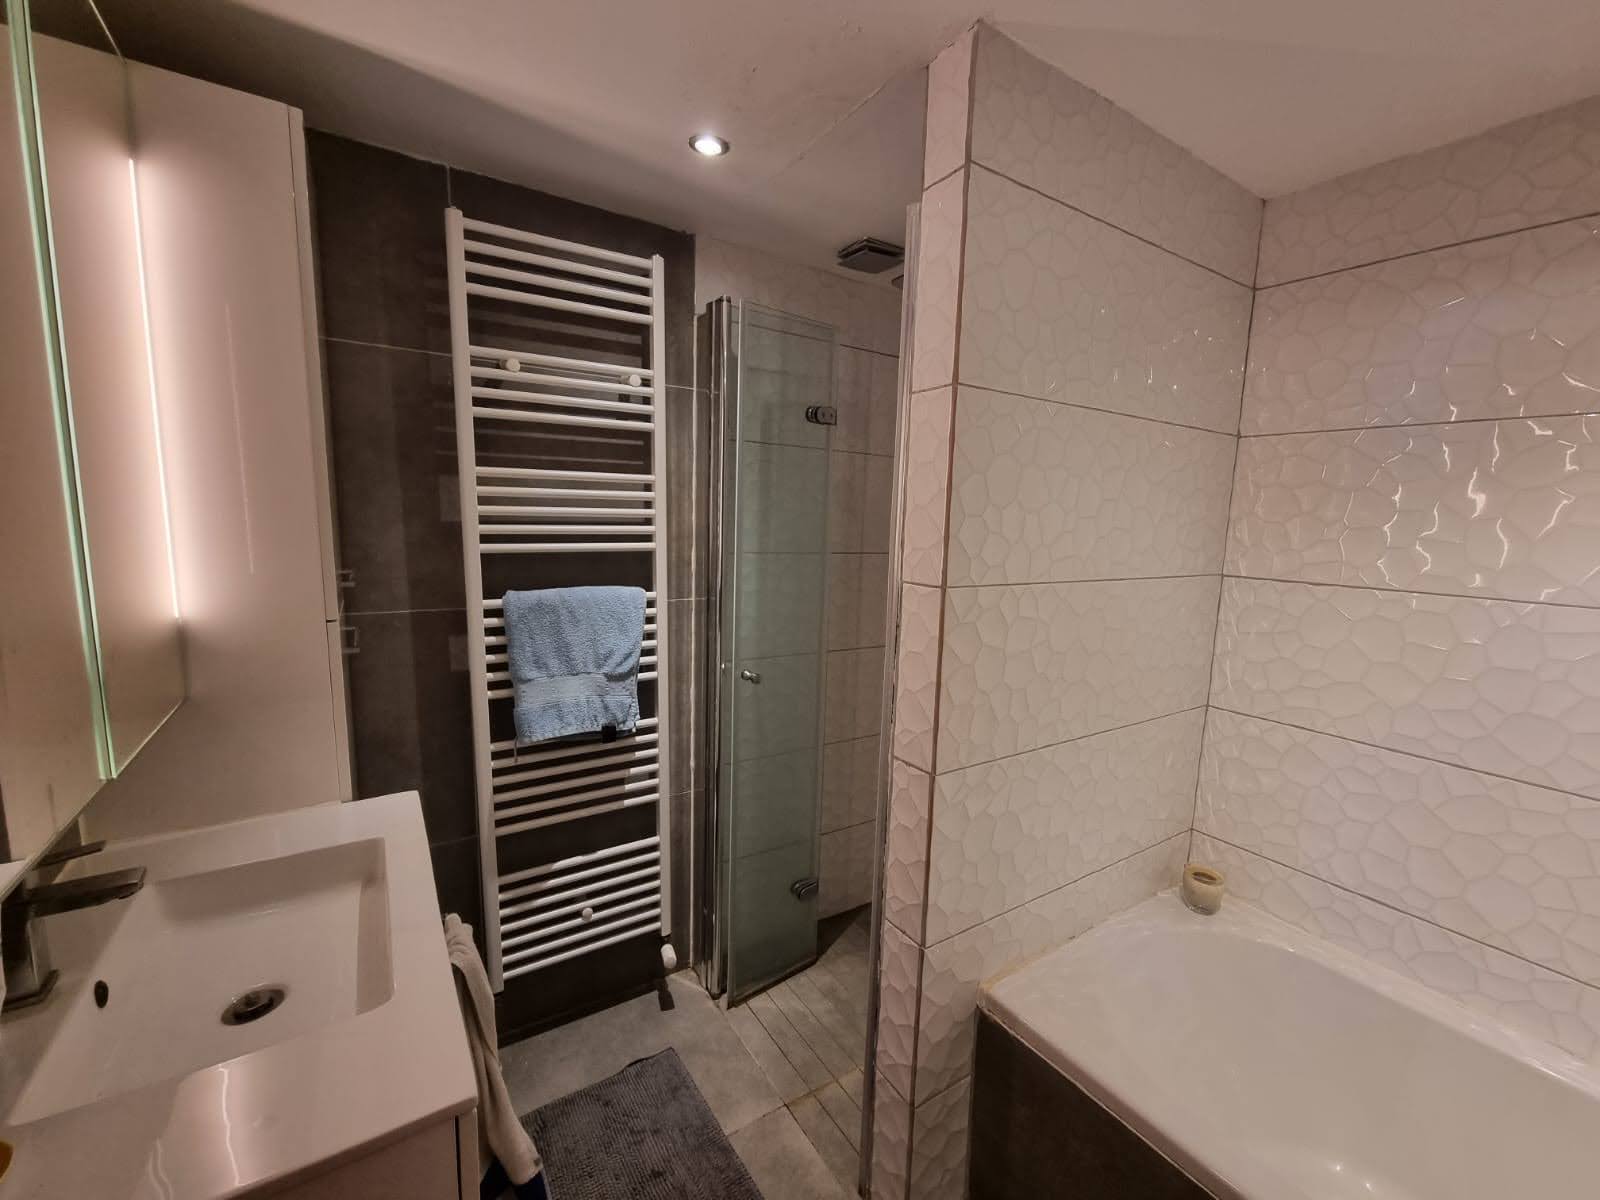 Driekoningen - Apartment for rent in Berchem, Antwerp bathroom 2